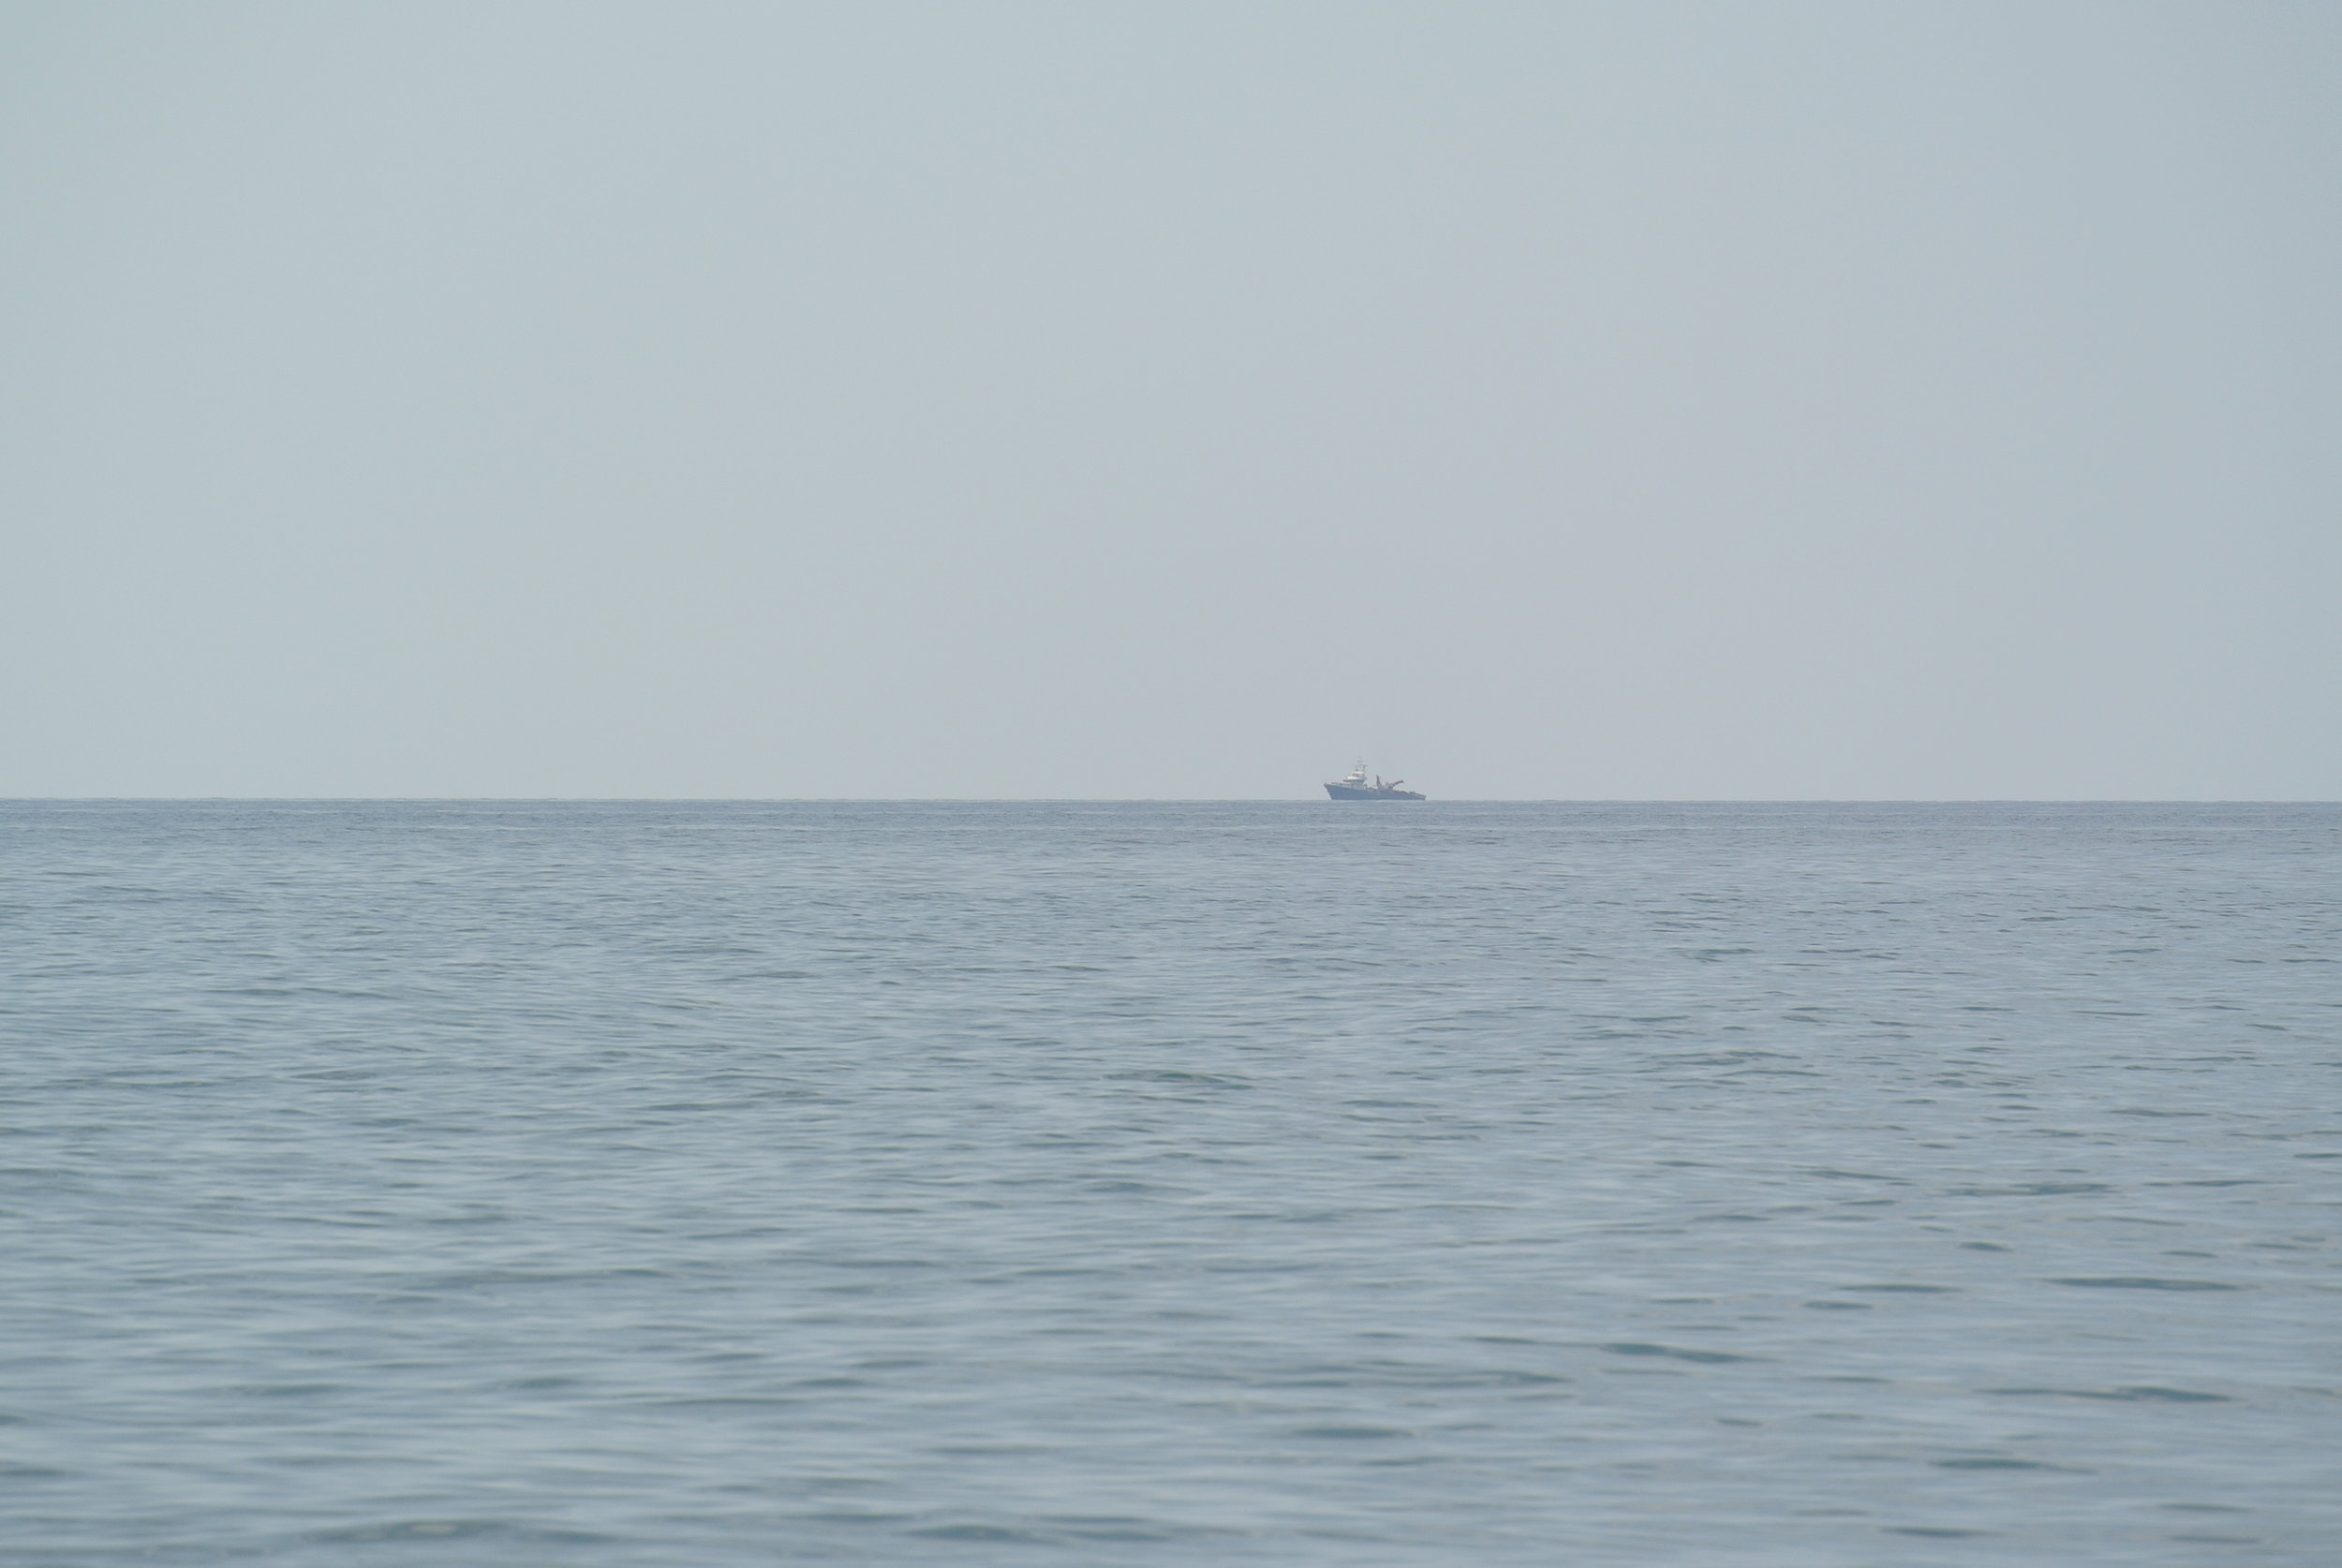   Ships on the horizon resembling rescue vessels. Longobardi, Italia; May 2018. ©Pamela Kerpius  